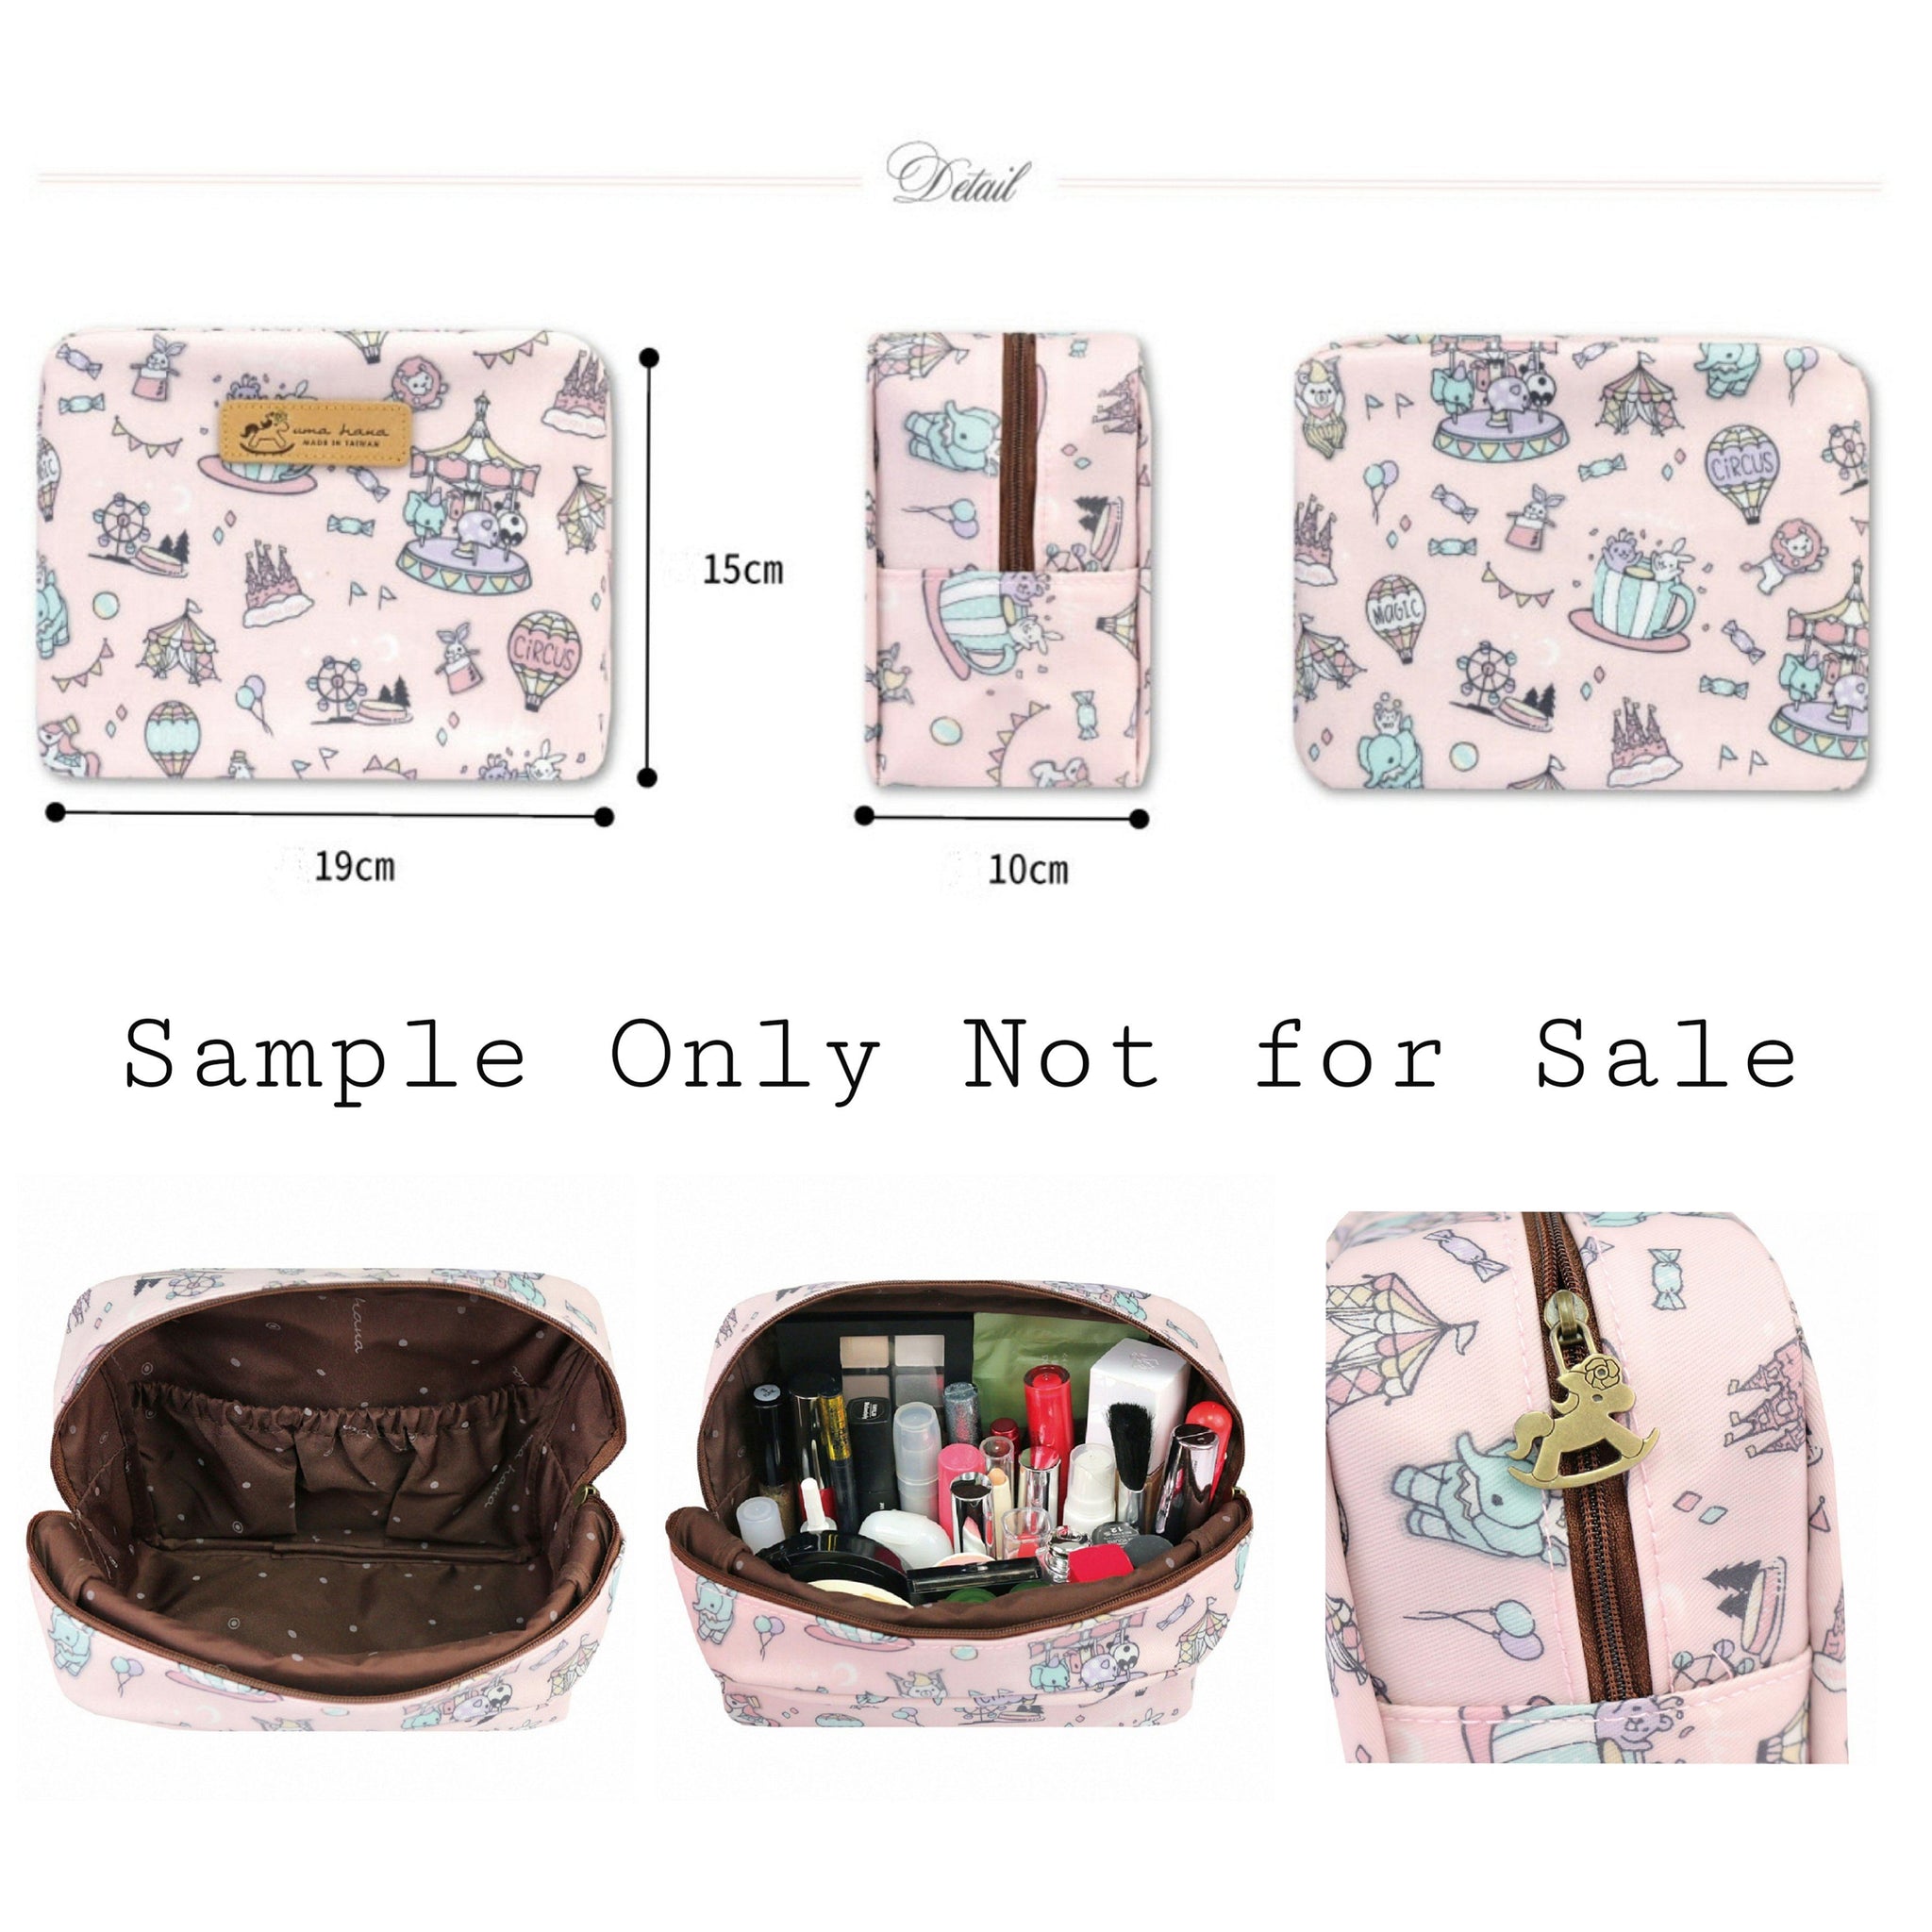 Pink Happy Taiwan Cube Cosmetic Bag Cosmetic Bag Tworgis 